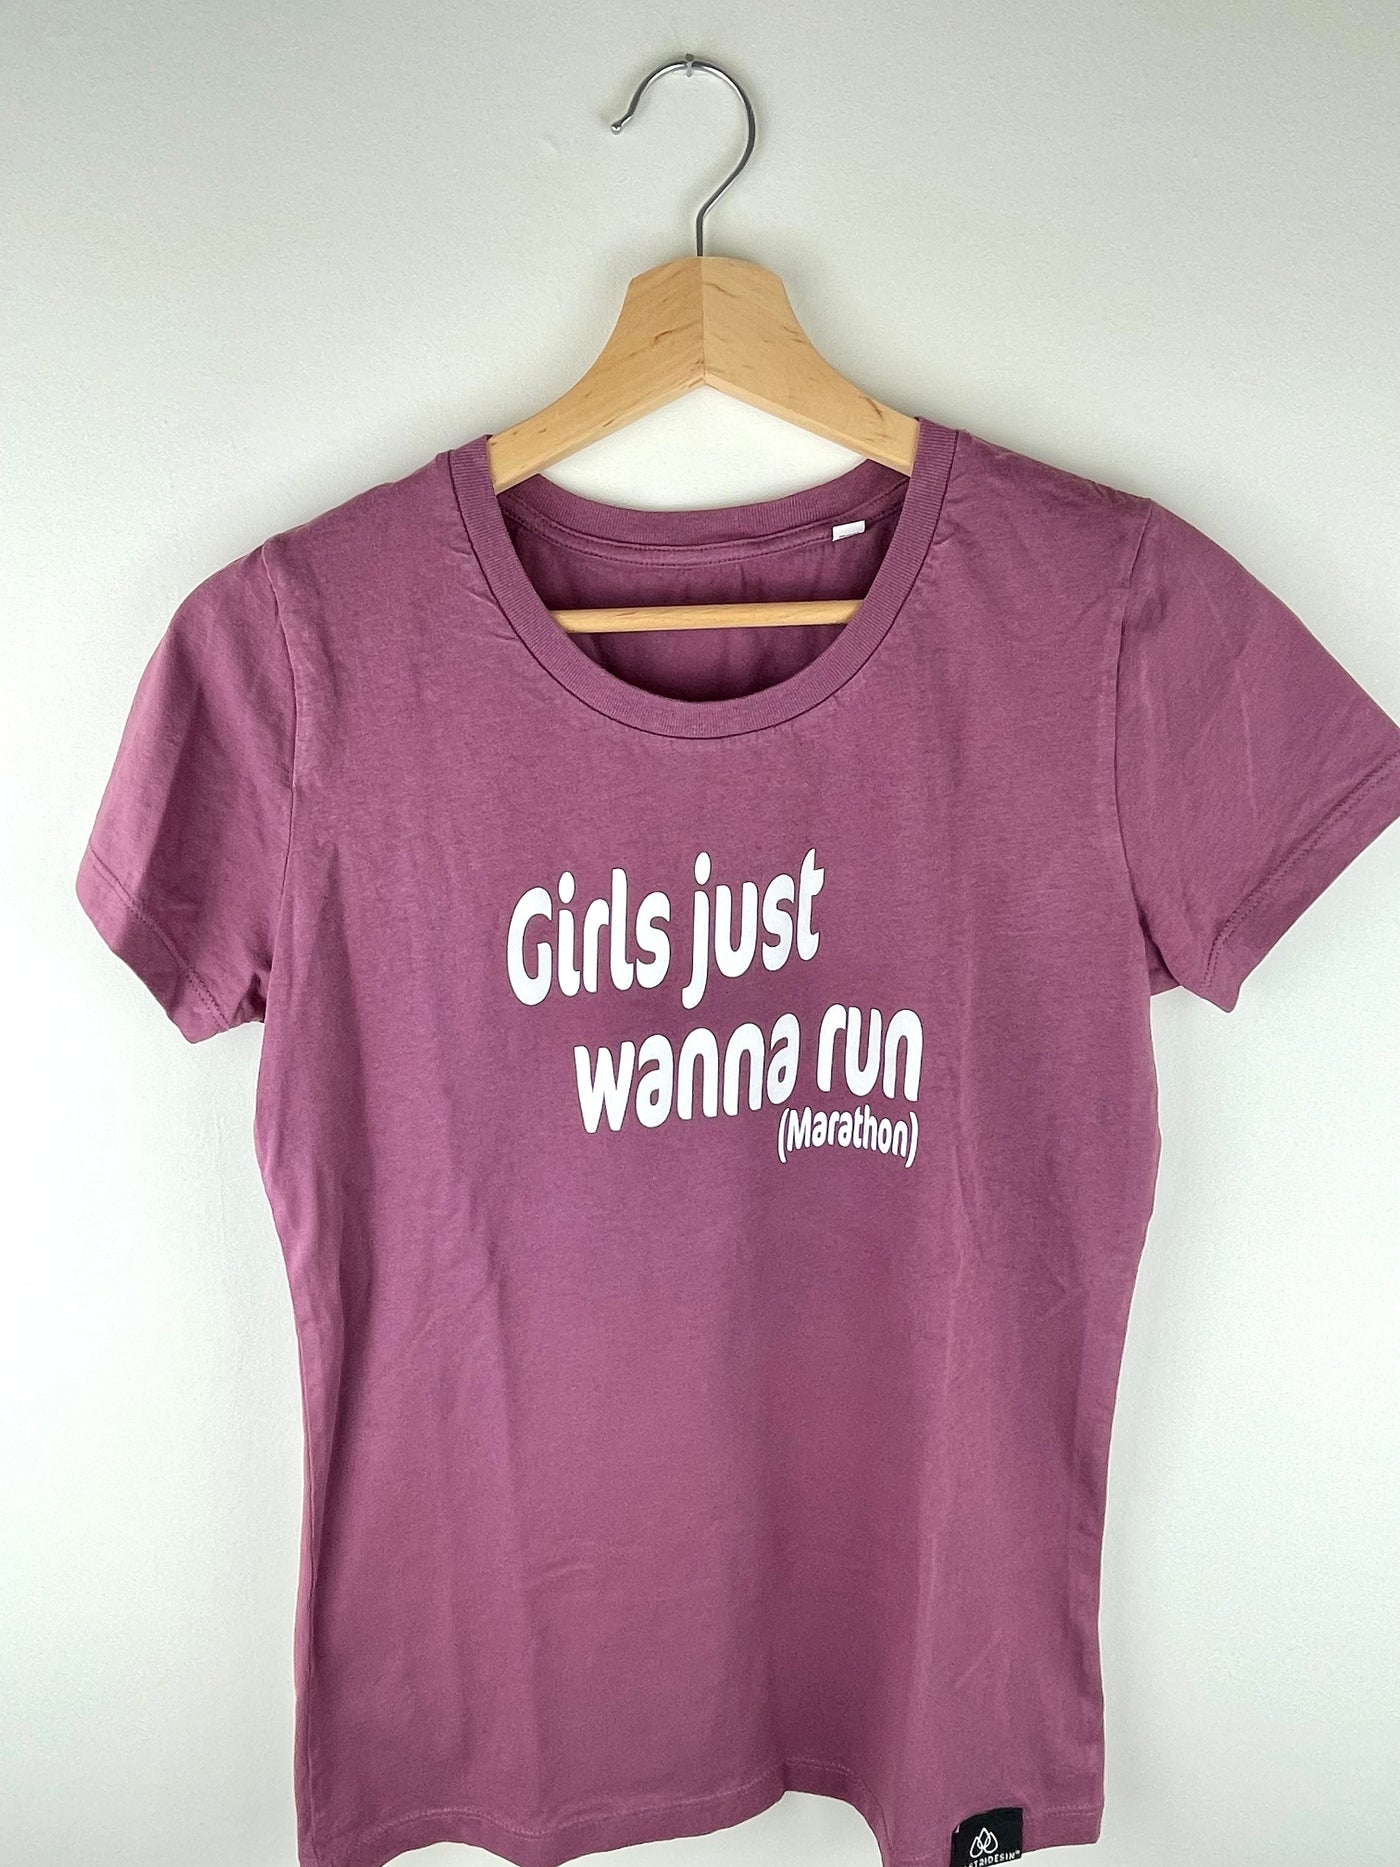 Girls just wanna run Lady T-Shirt Gr. S | Loopback by Allstridesin